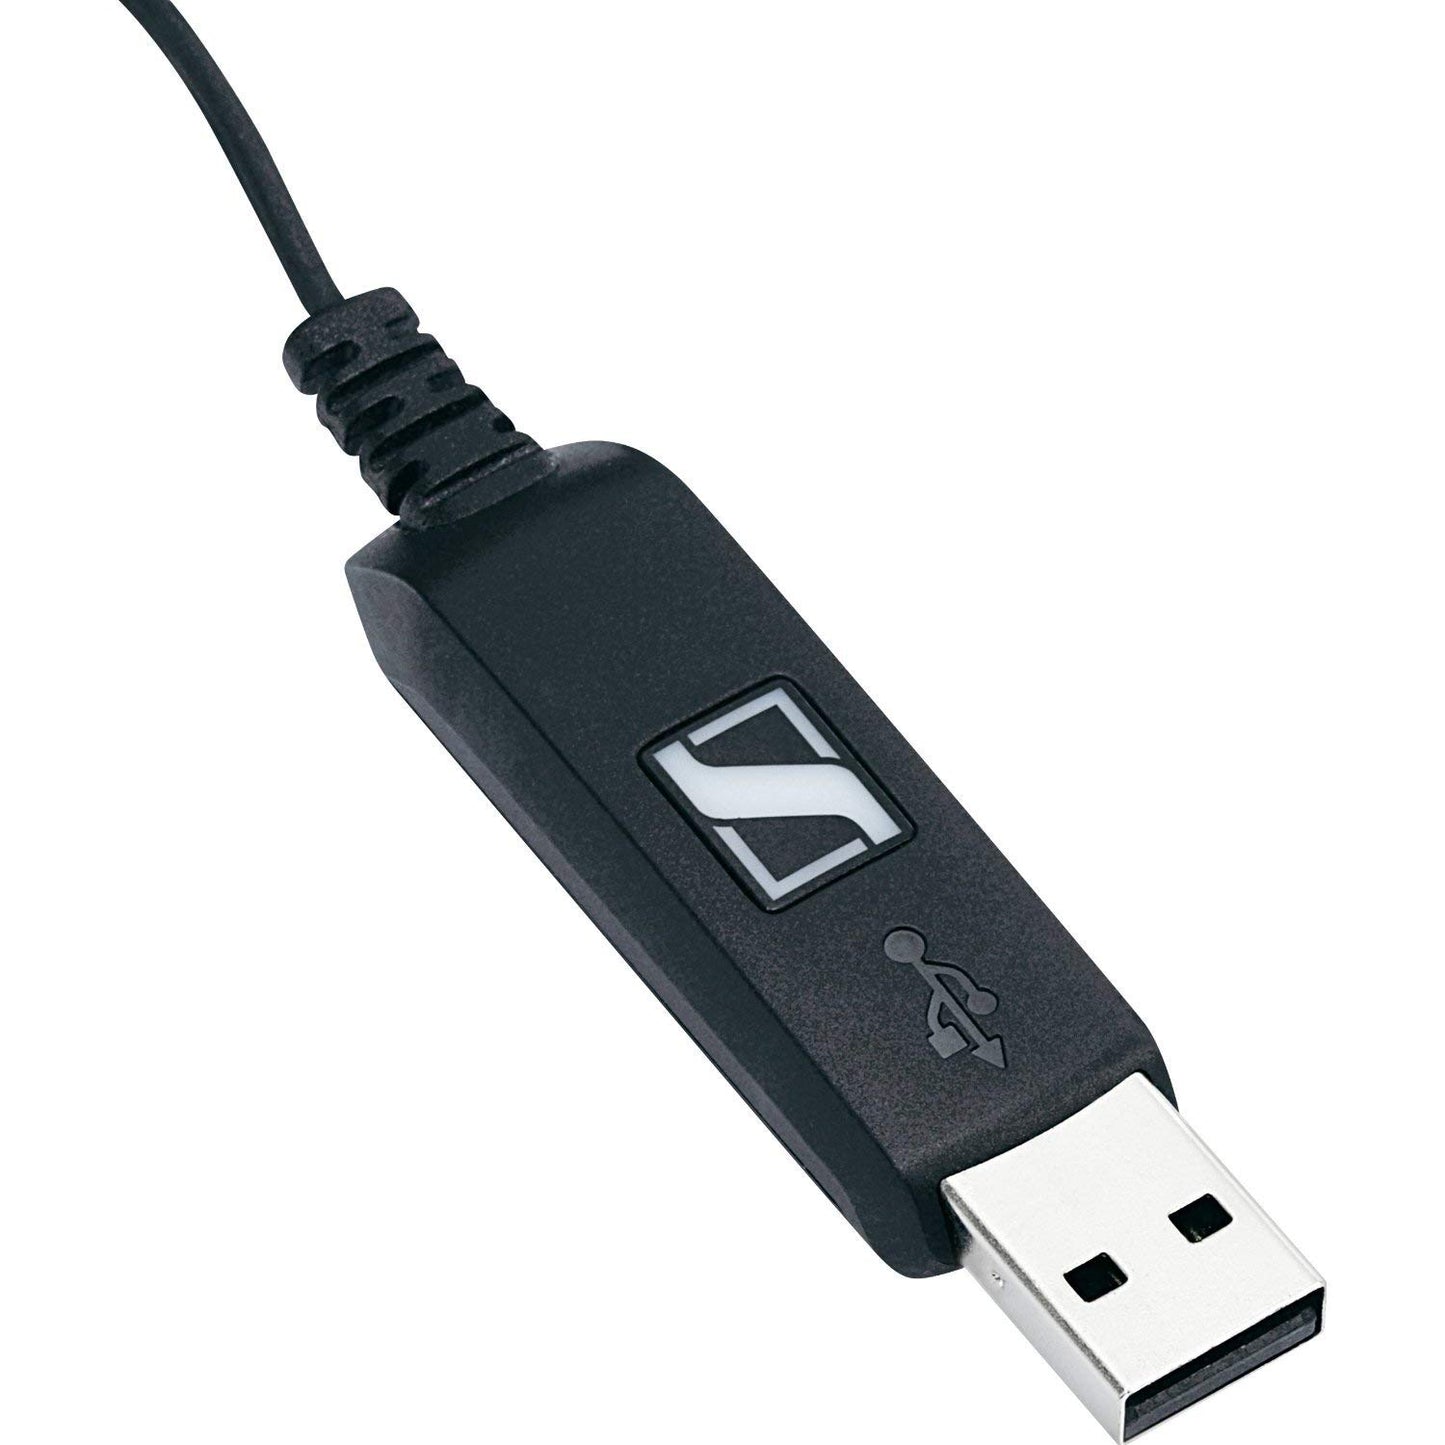 Sennheiser PC 8 Chat On-Ear USB Headphone with Mic